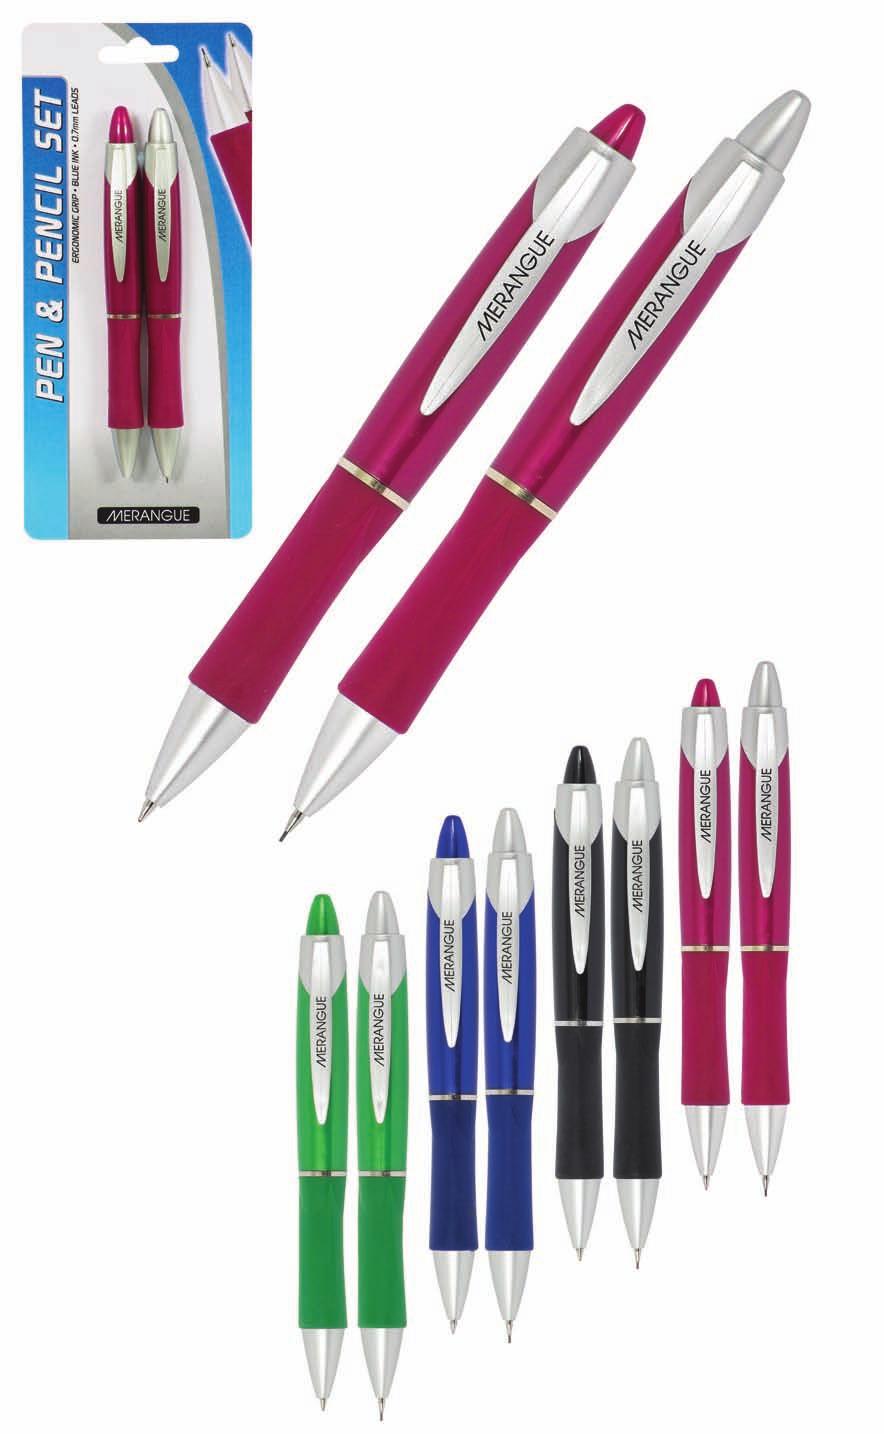 PEN & PENCIL 38P5-7031-00-000 COMBINATION SETS Pen and Pencil Set - Ergonomic